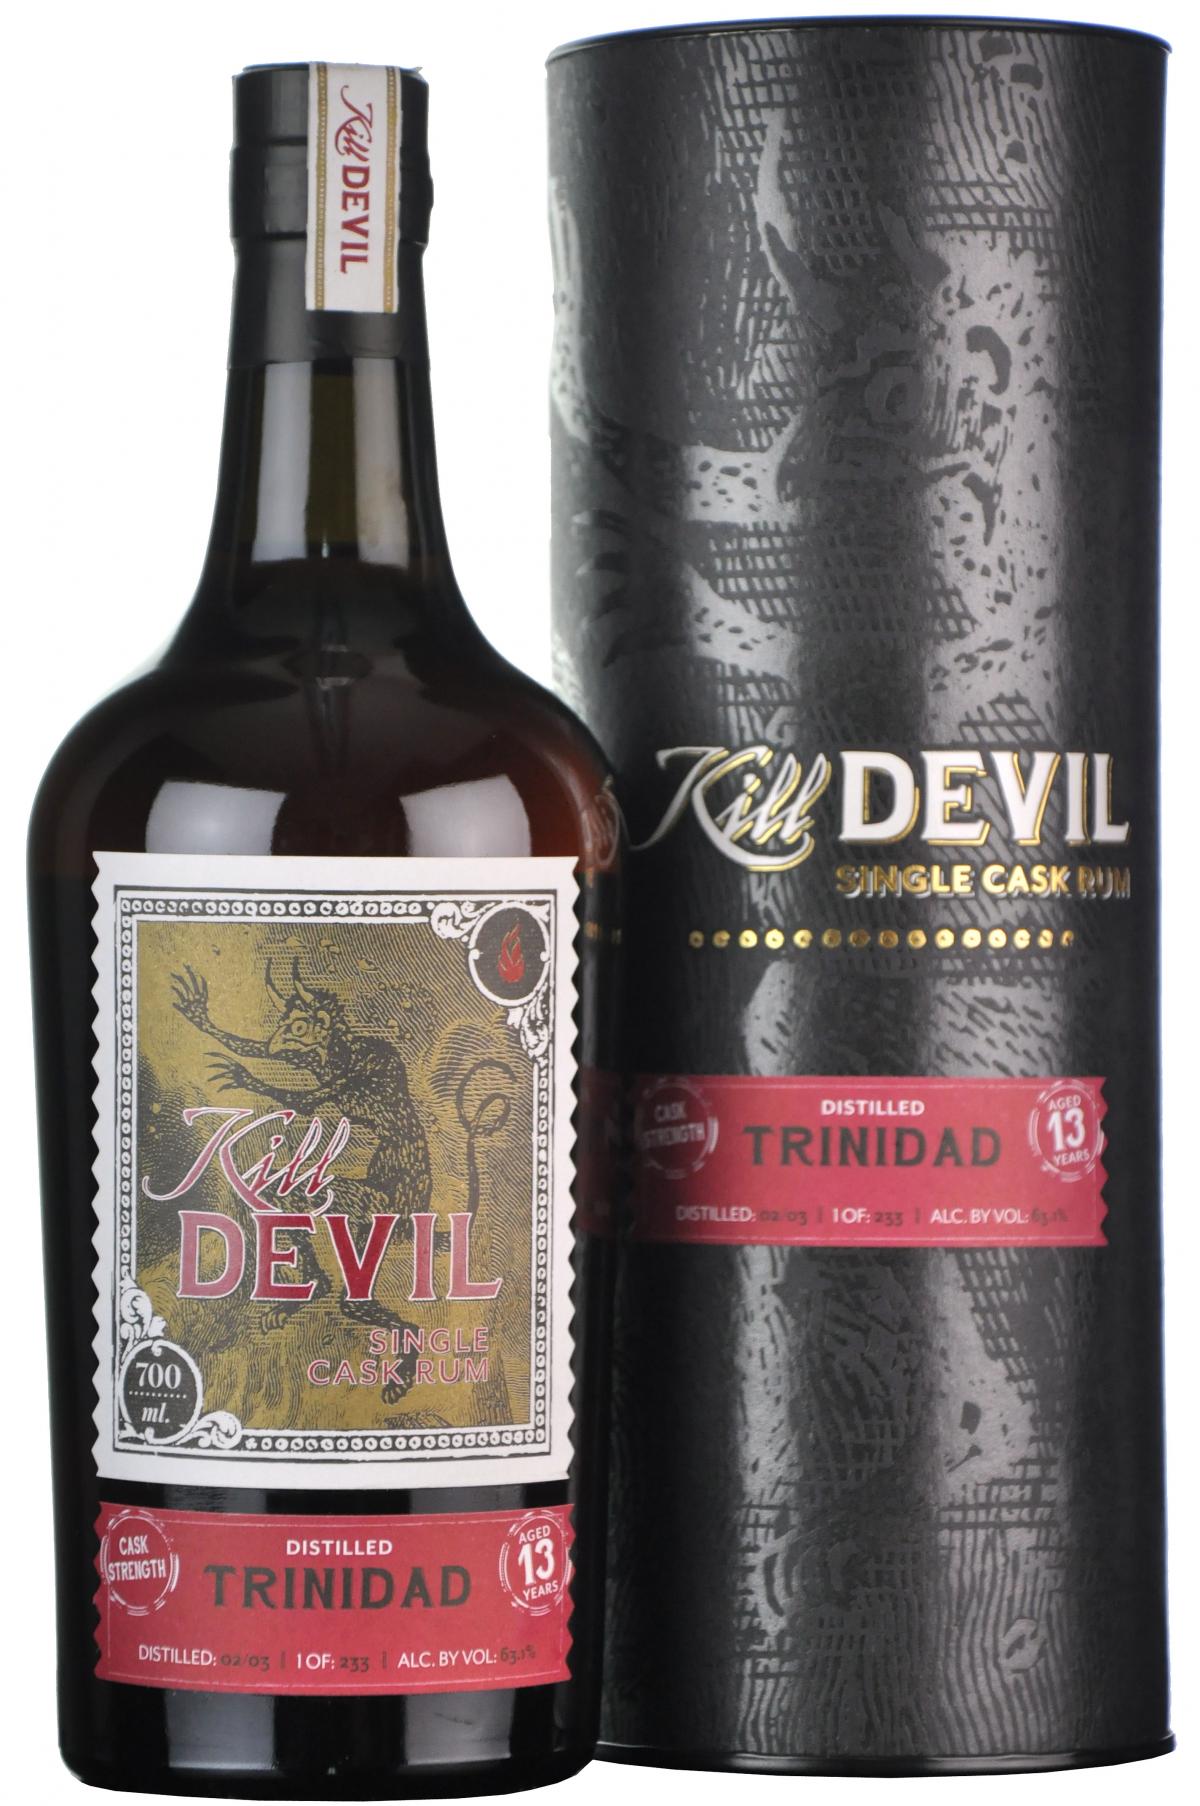 Trinidad 13 Year Old | Kill Devil Single Cask Rum